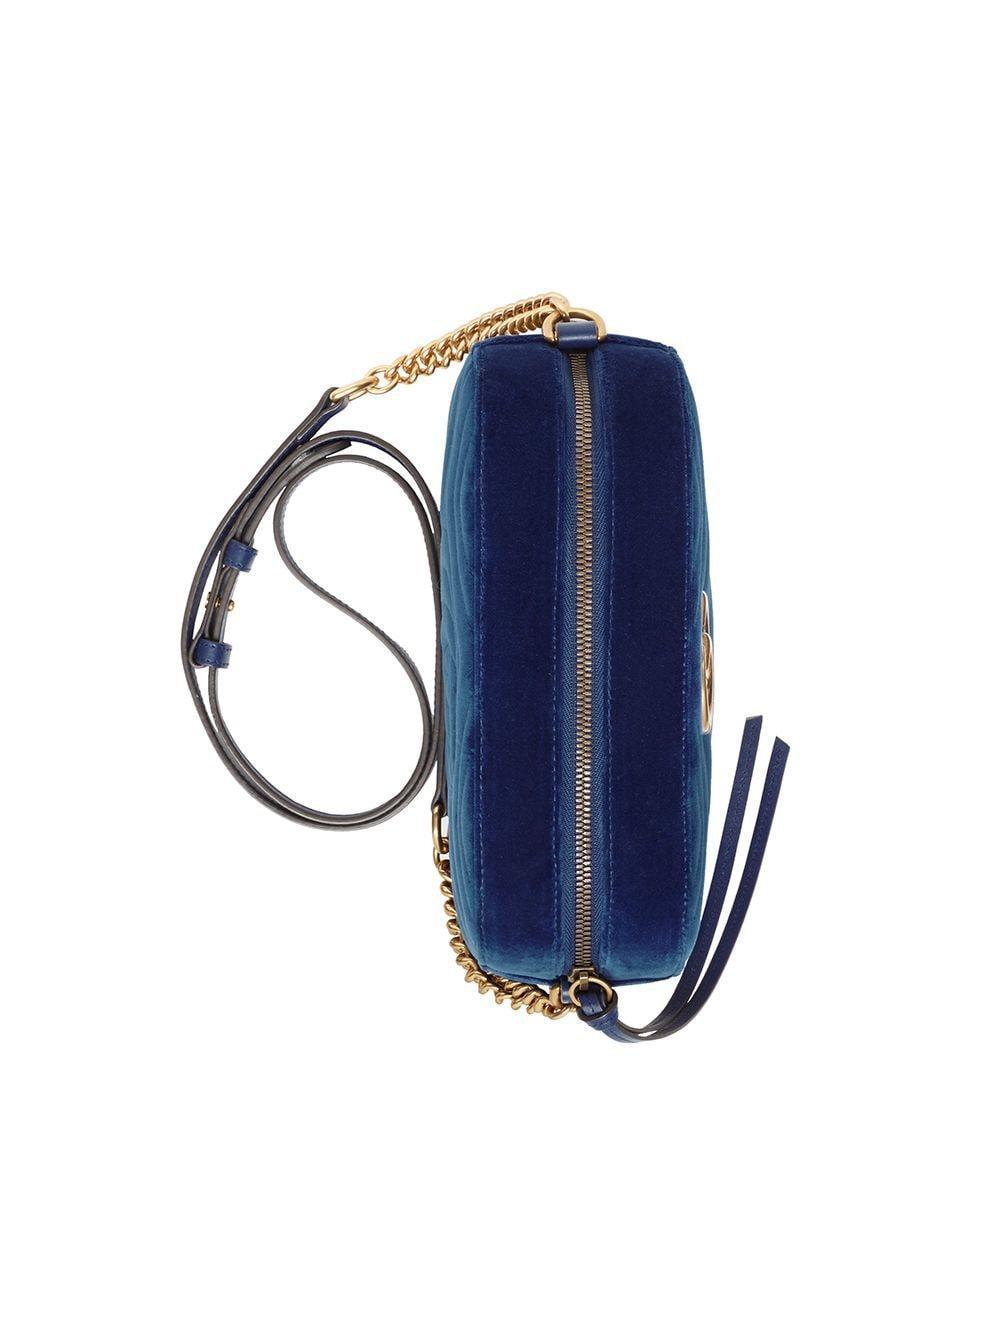 Gucci GG Marmont Velvet Small Shoulder Bag in Dark Blue (Blue) - Lyst